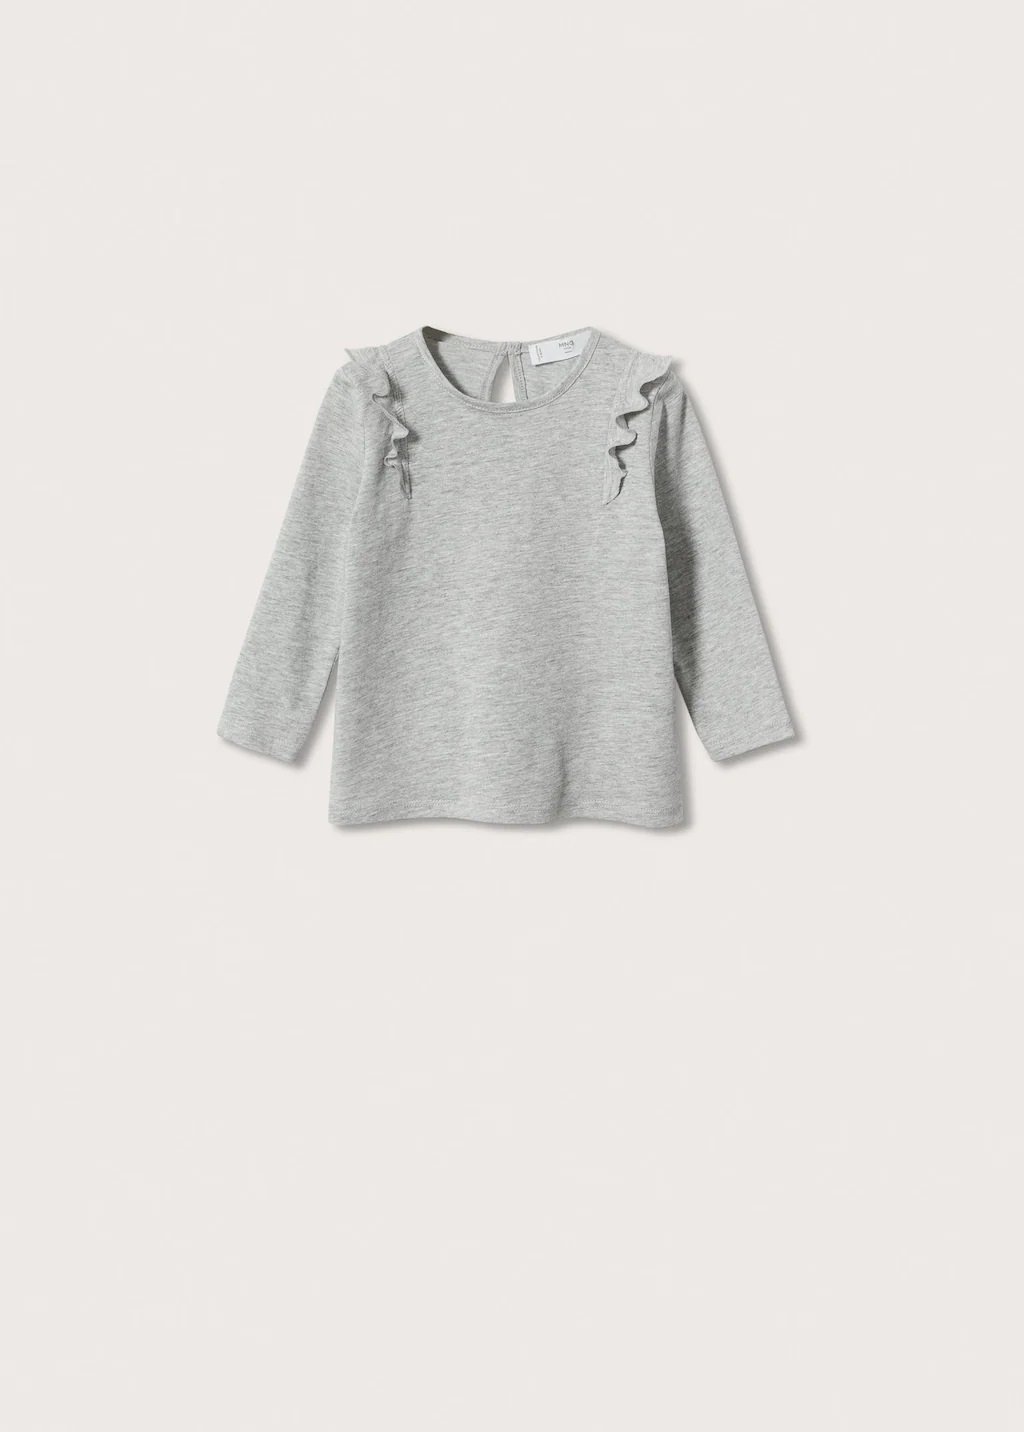 Mango Long-Sleeved T-Shirt with Ruffles in Heather Grey.jpg